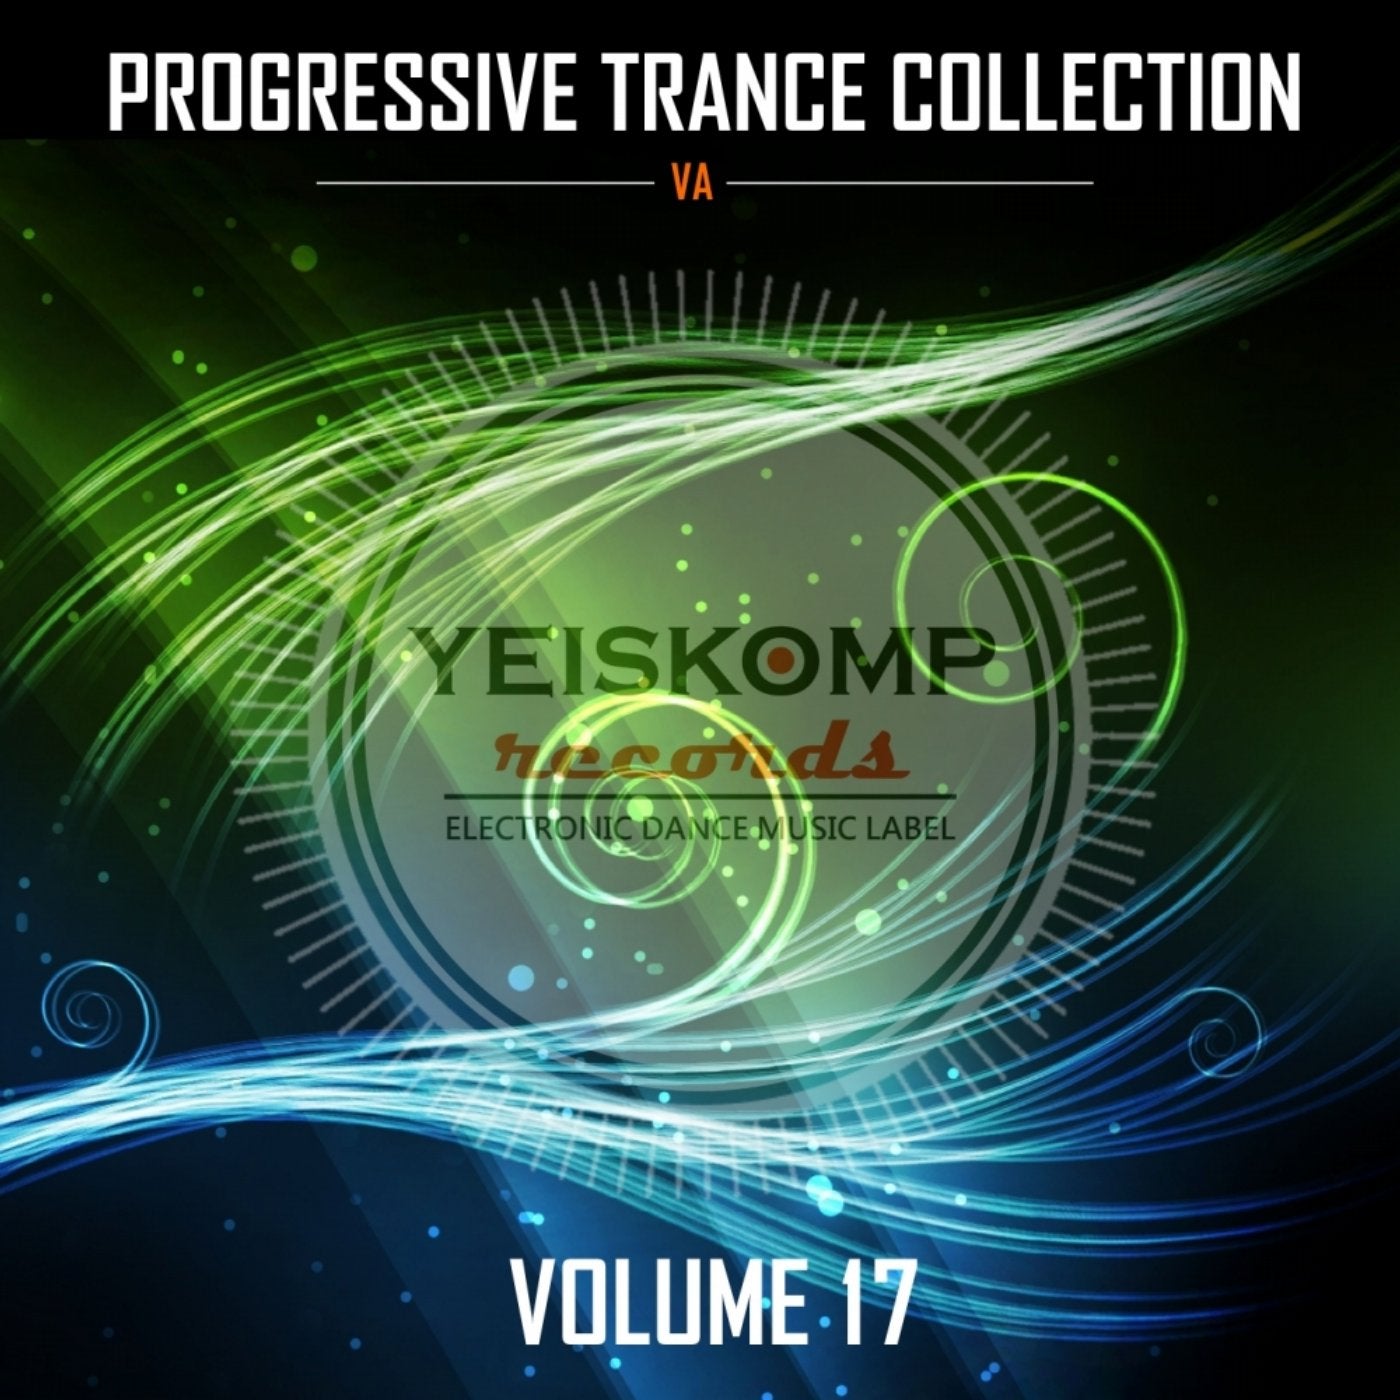 Progressive Trance Collection by Yeiskomp Records Vol. 17